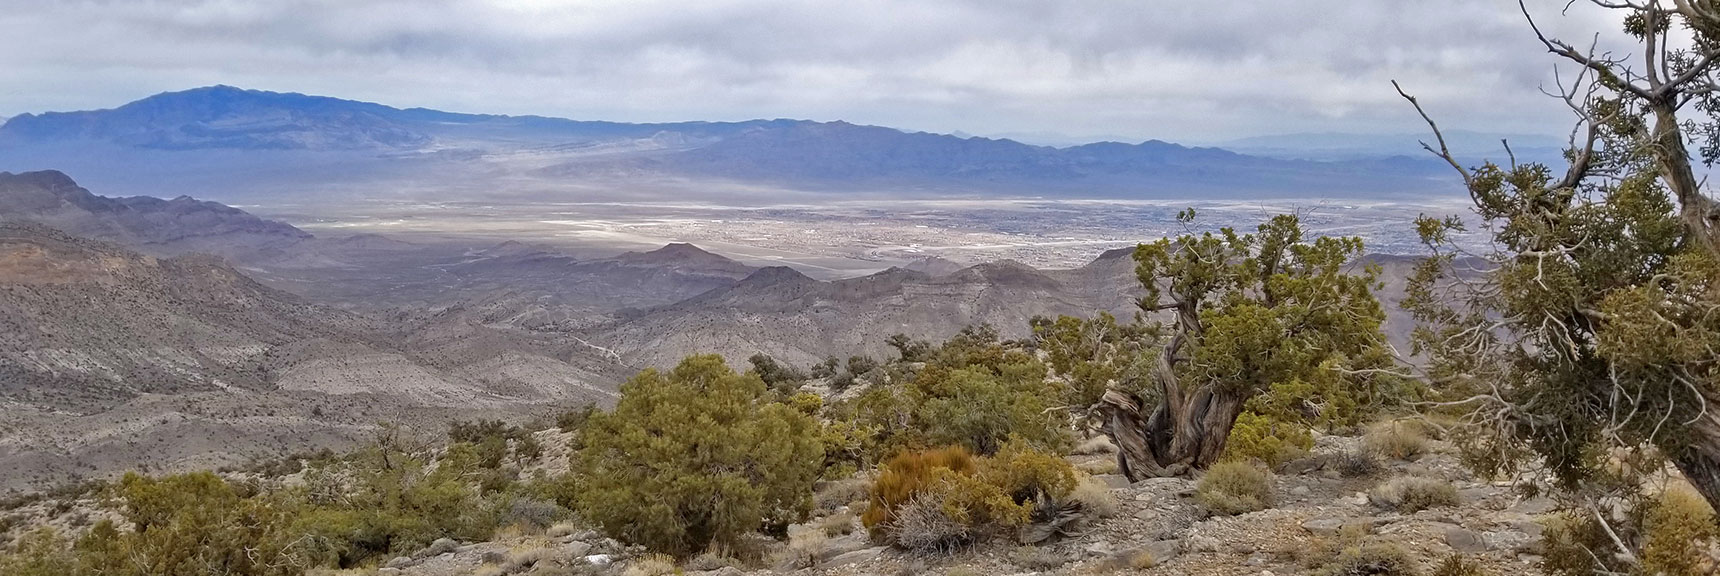 Damsel Peak Summit in Calico Basin, Nevada 004